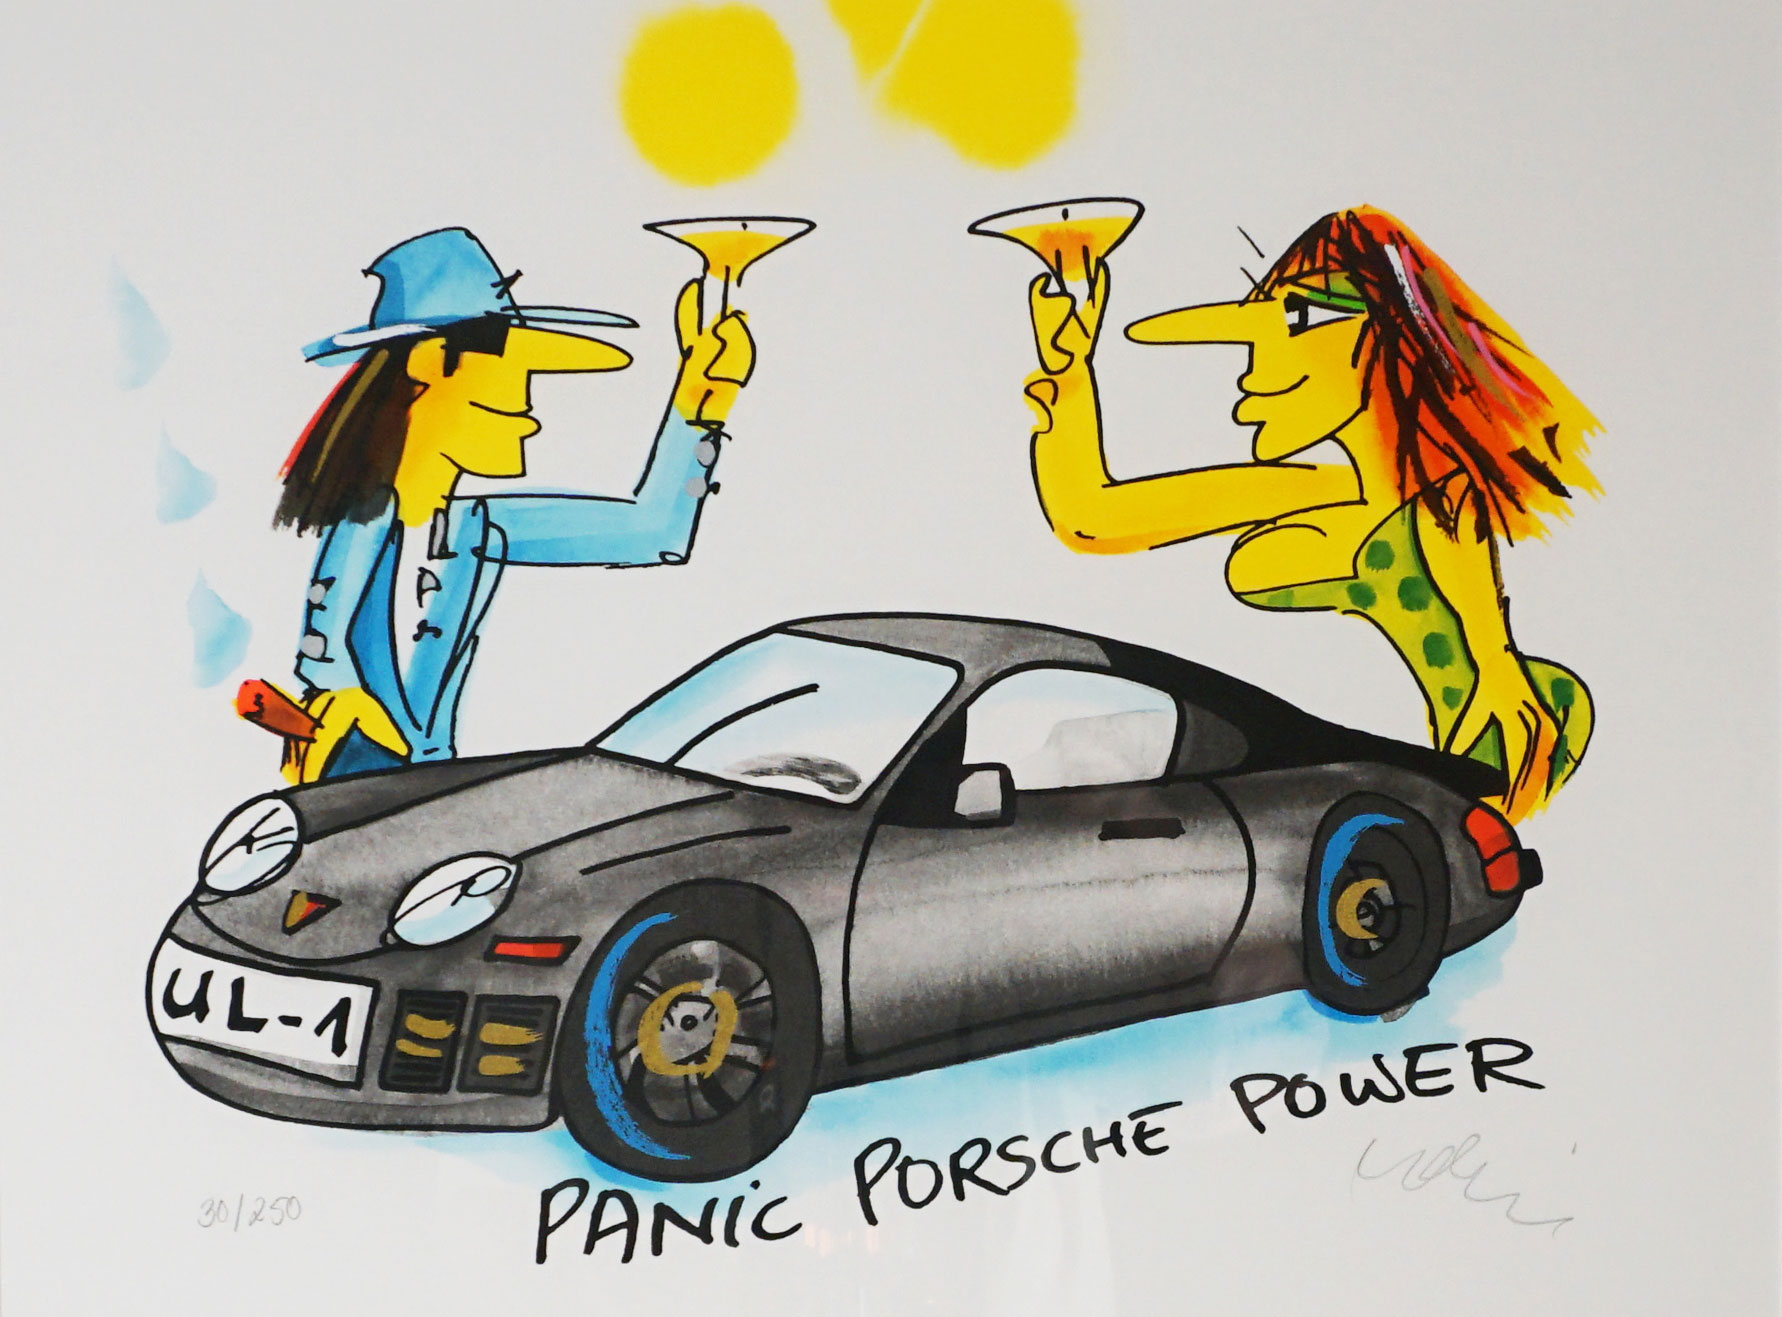 Udo Lindenberg "Panic Porsche Power"